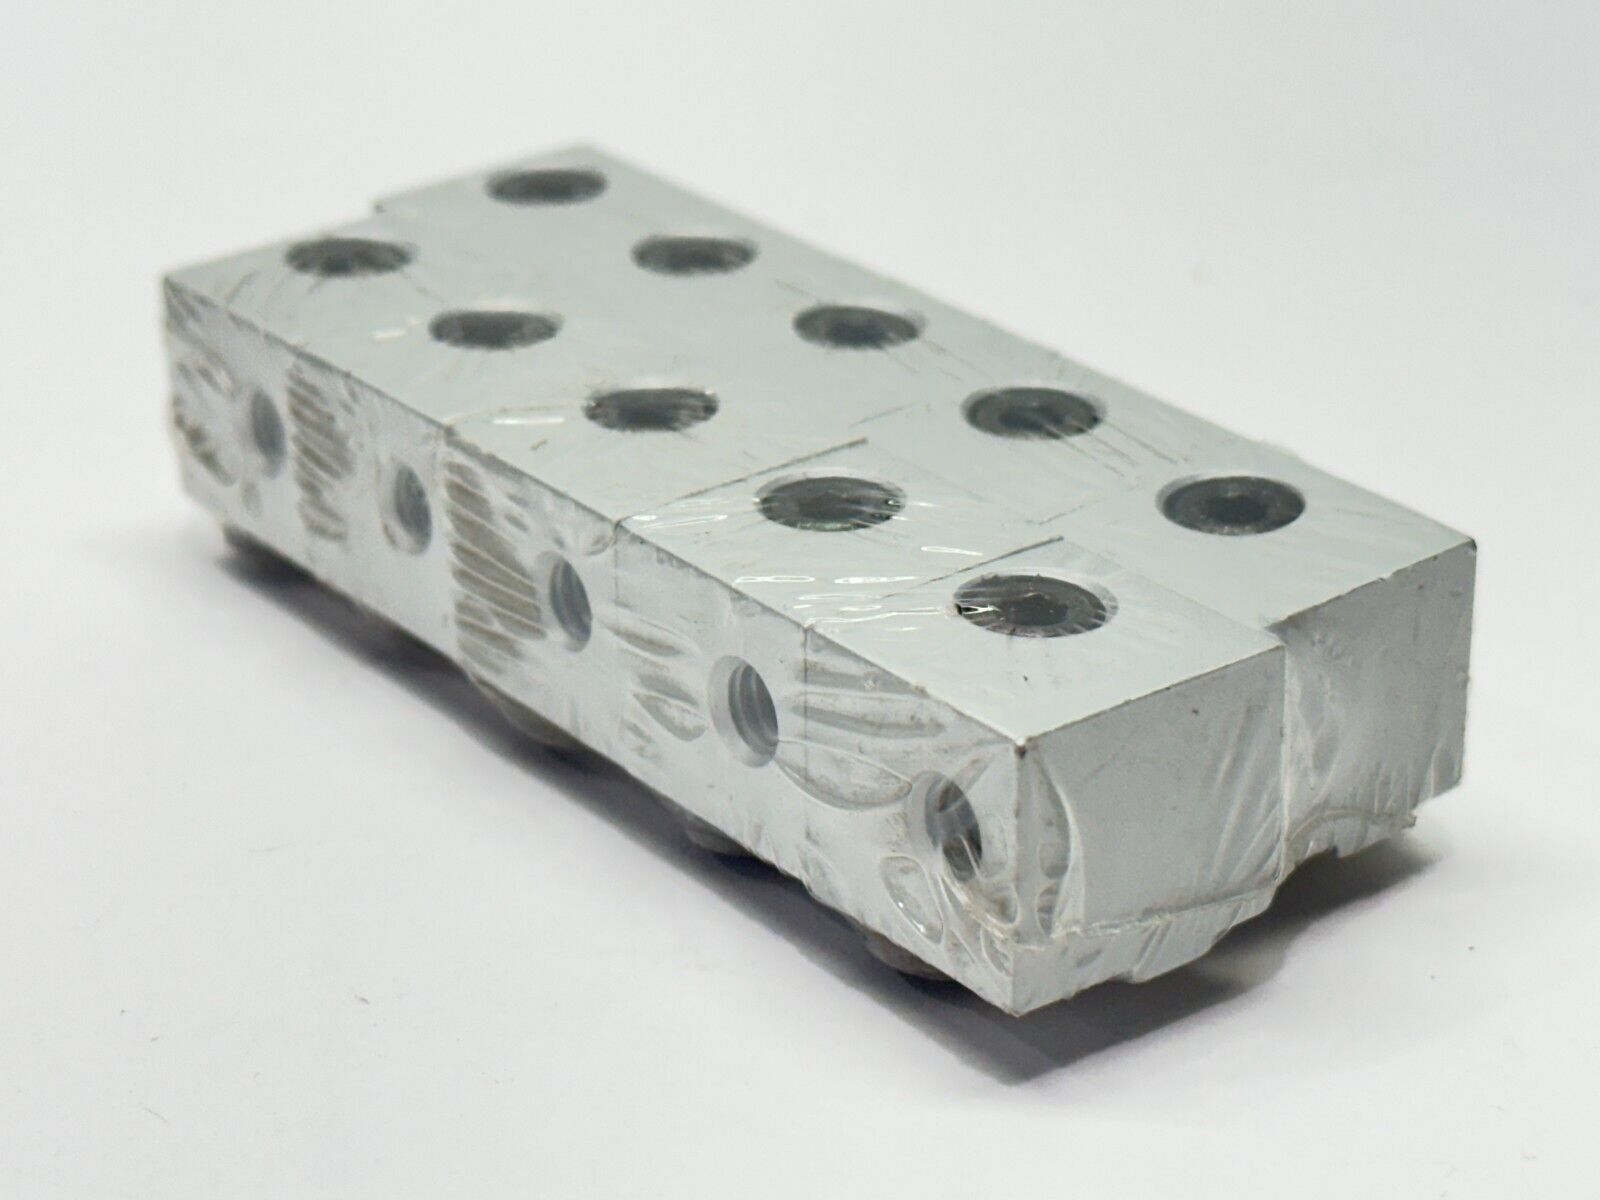 80/20 2427 10 Series Aluminum Panel Mount Block w/ Hardware LOT OF 10